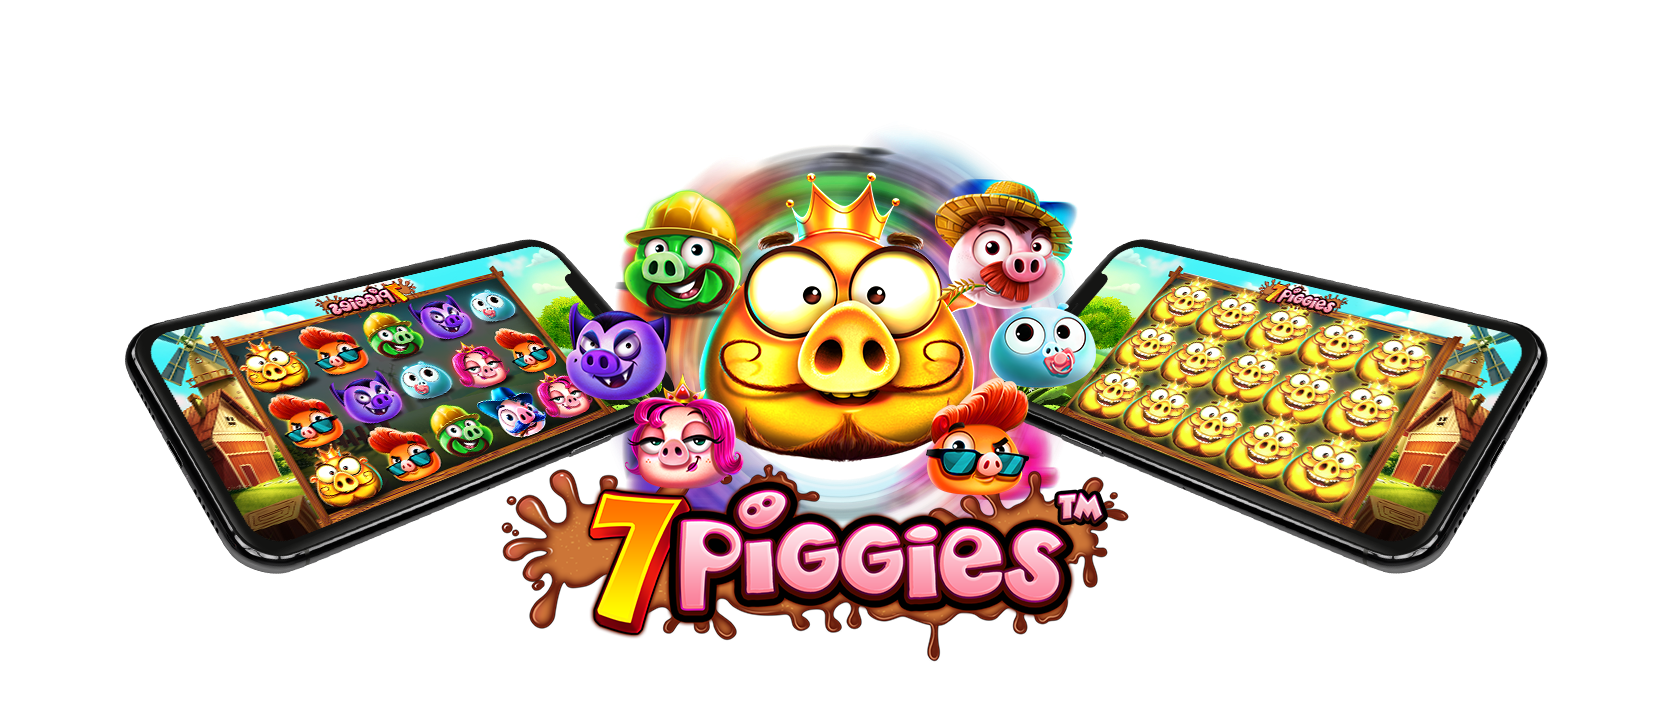 7 piggies slots game logo